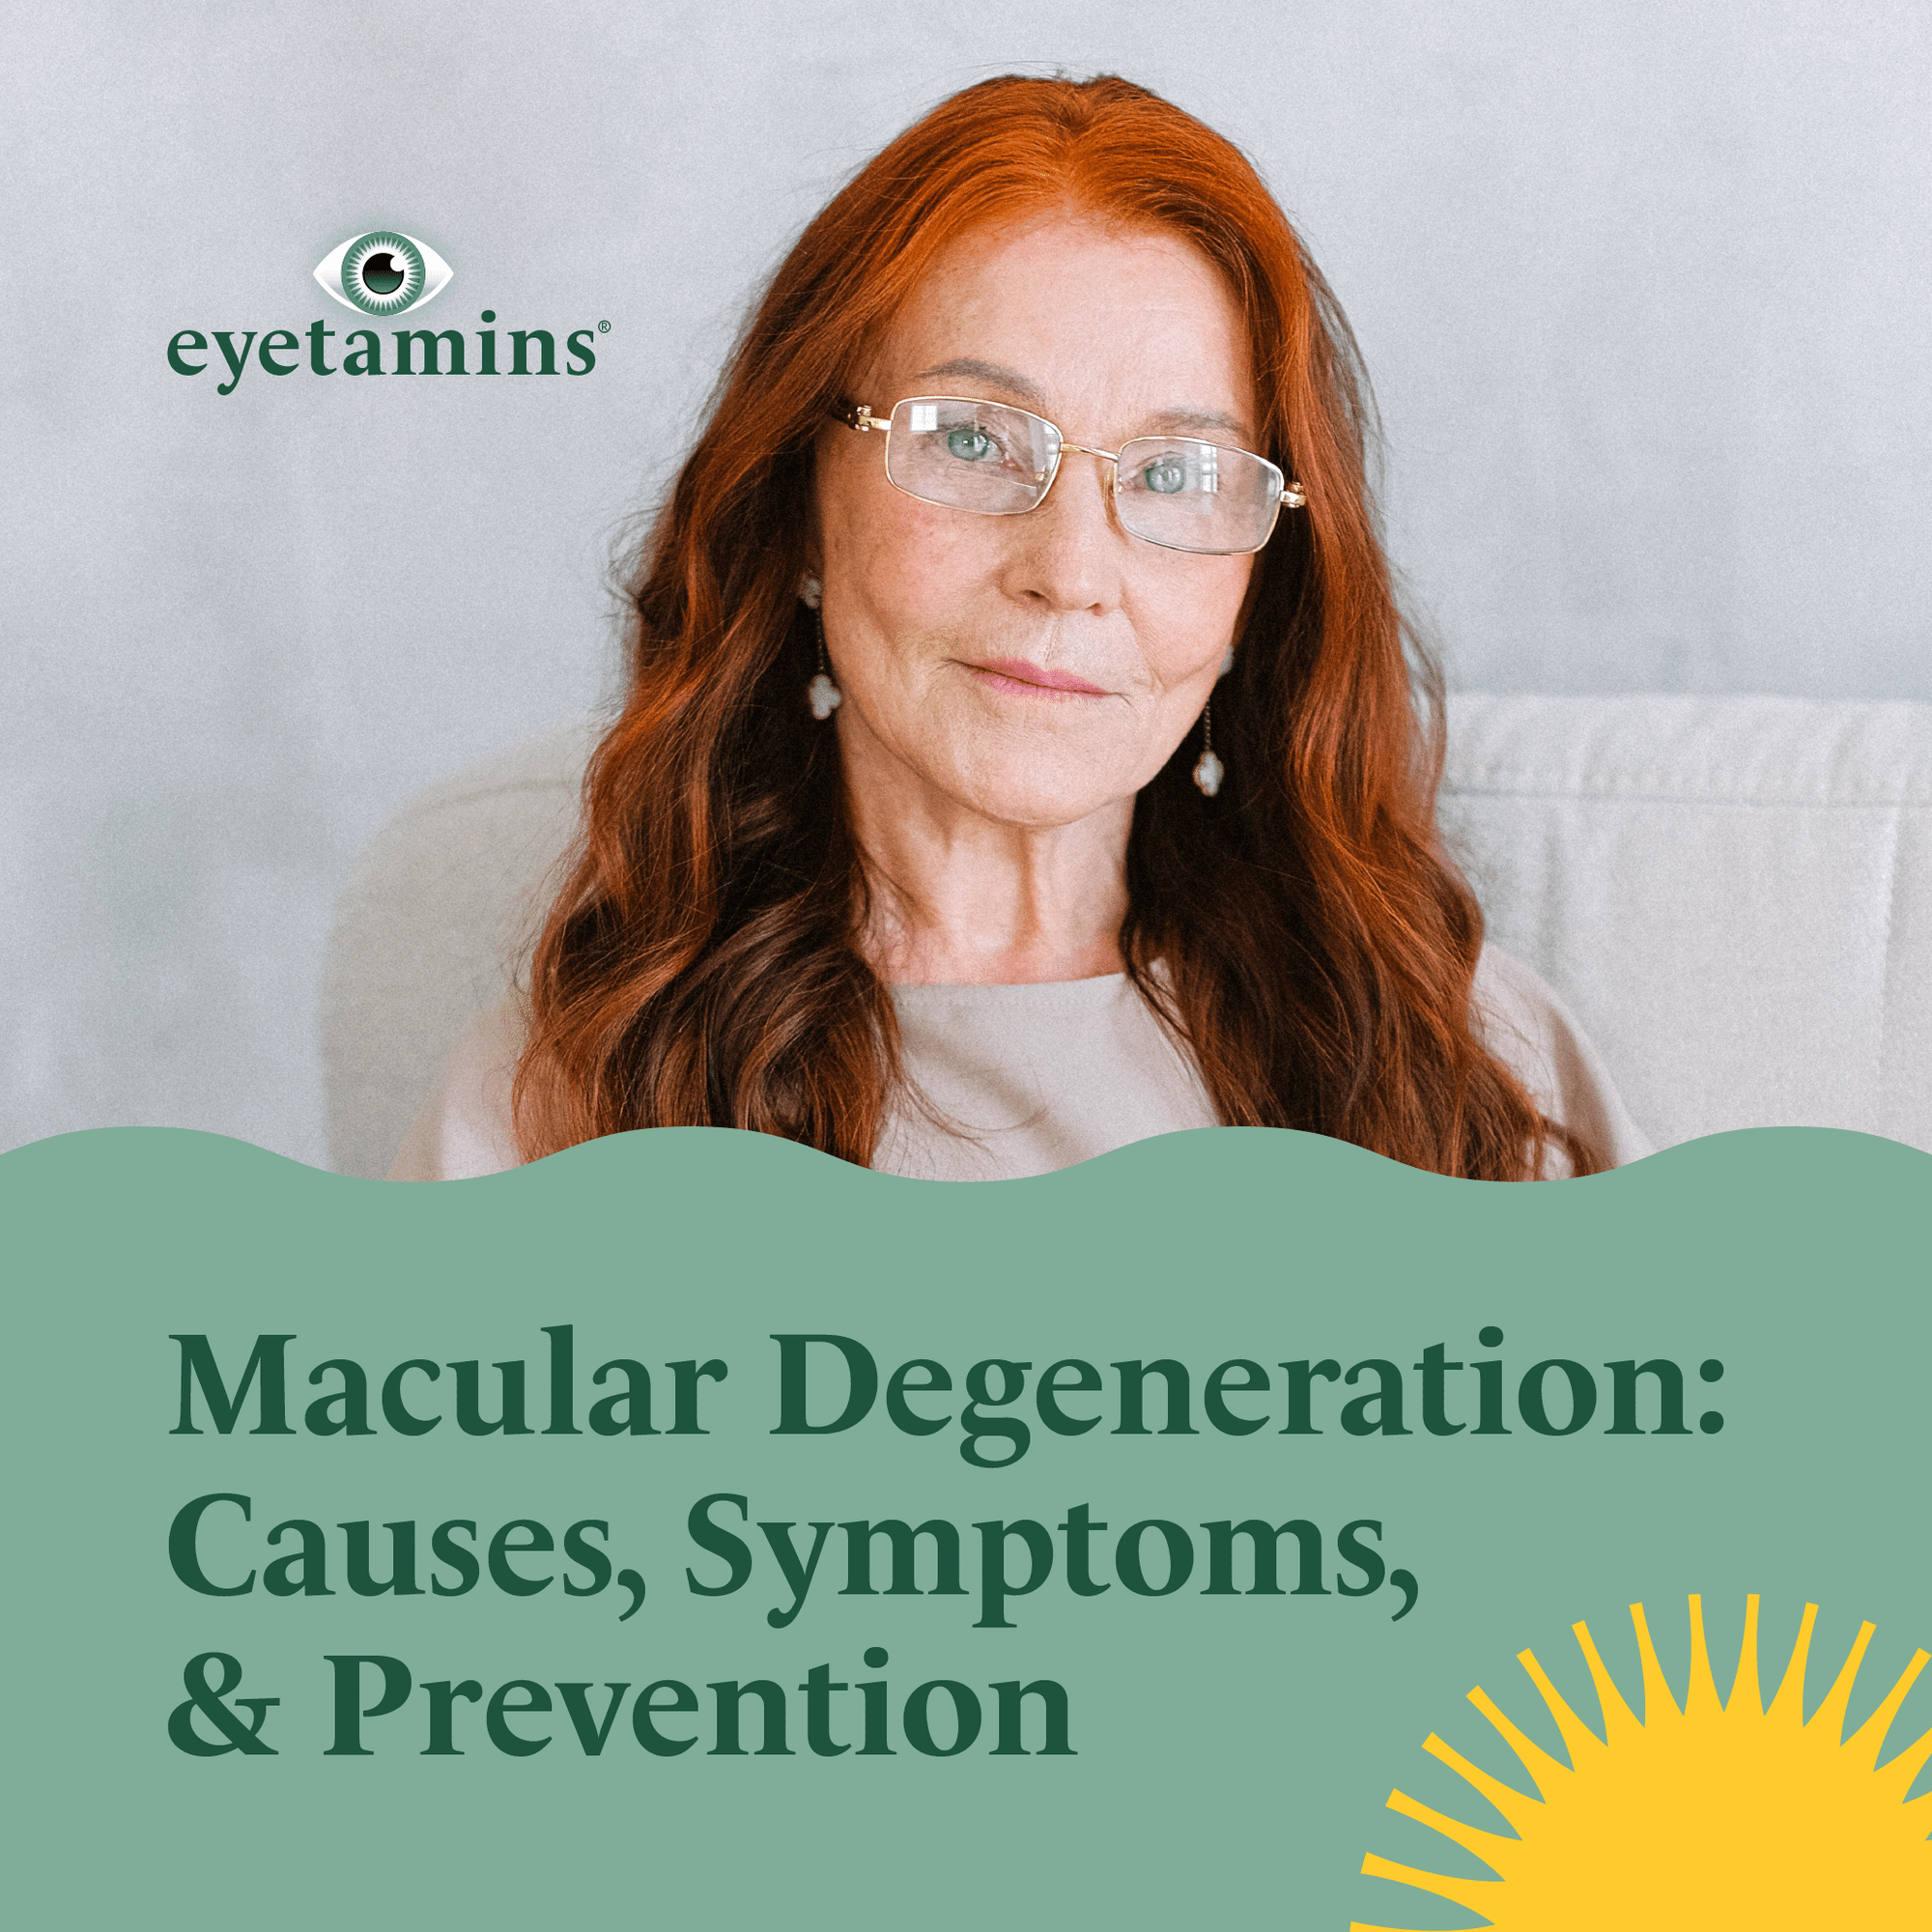 Eyetamins - Macular Degeneration: Causes, Symptoms, & Prevention